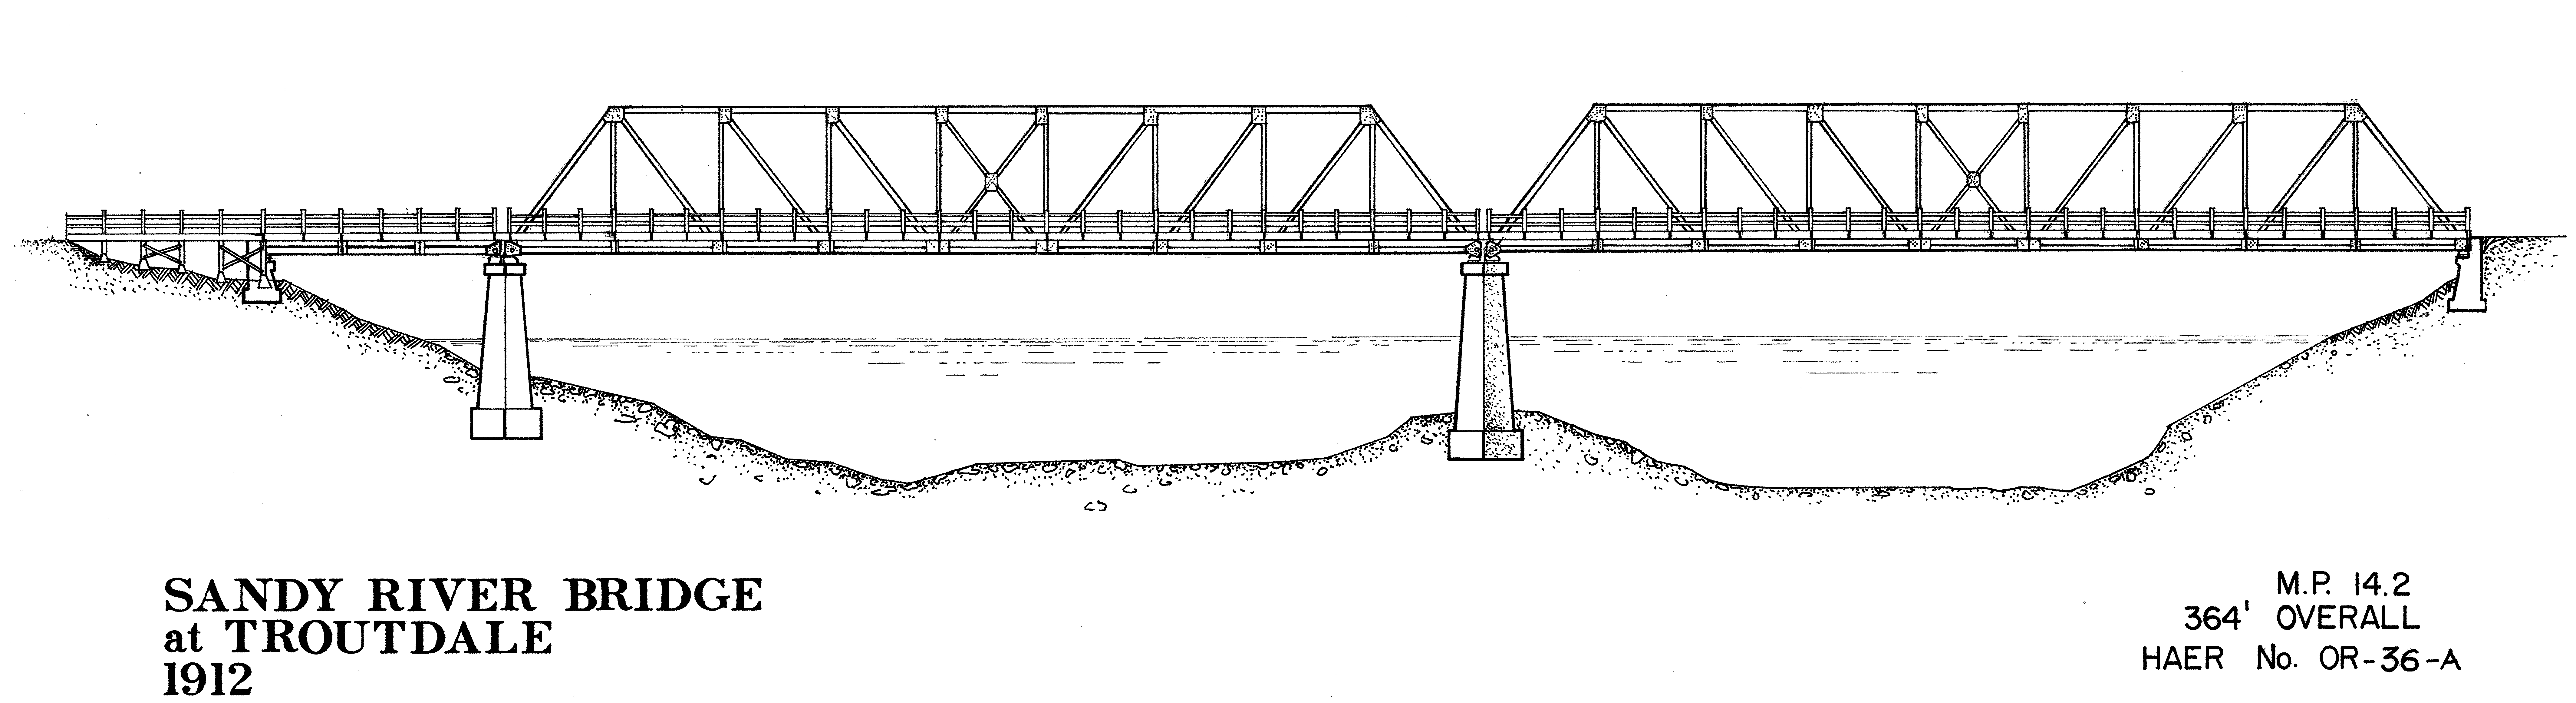 Typical Cantilever Bridge.